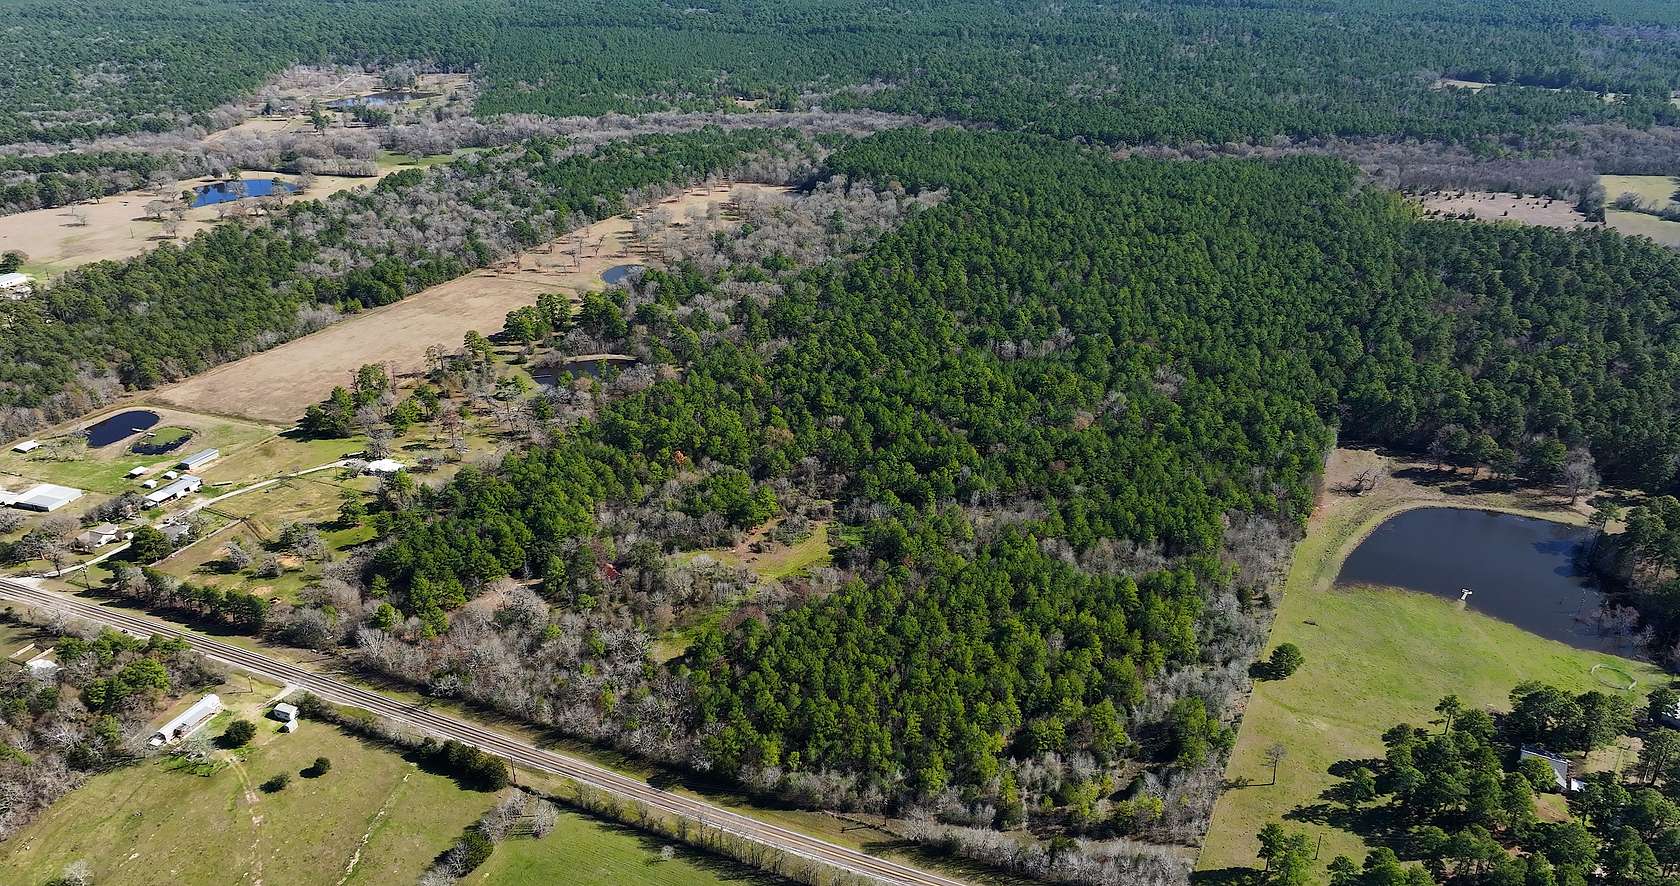 179 Acres of Recreational Land & Farm for Sale in Huntsville, Texas